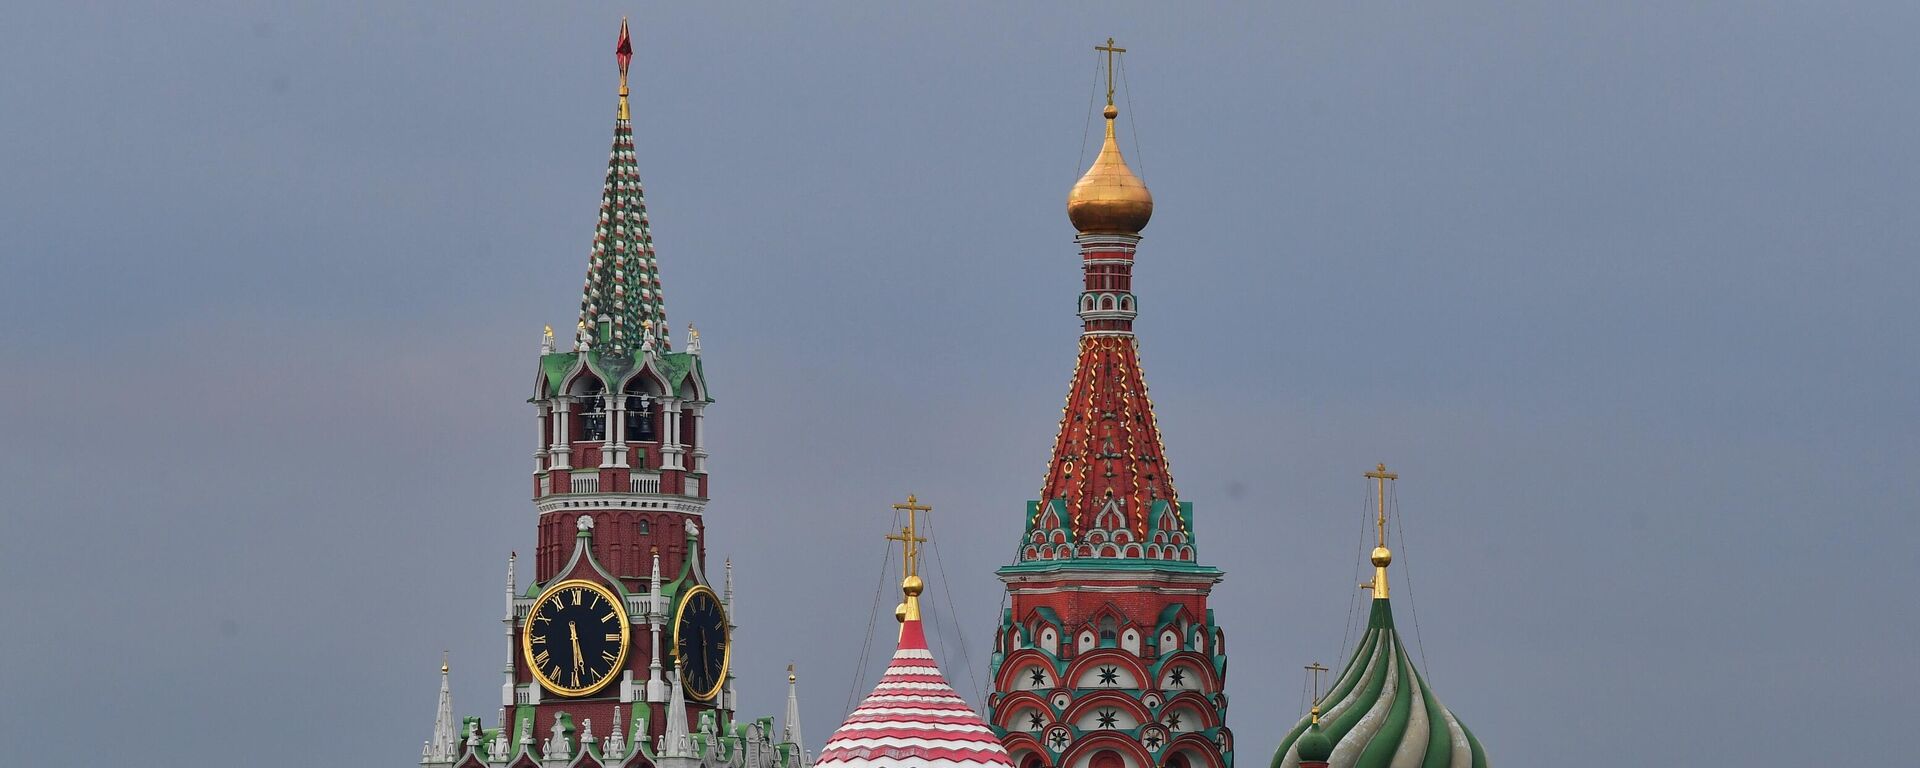 El Kremlin de Moscú - Sputnik Mundo, 1920, 20.12.2021